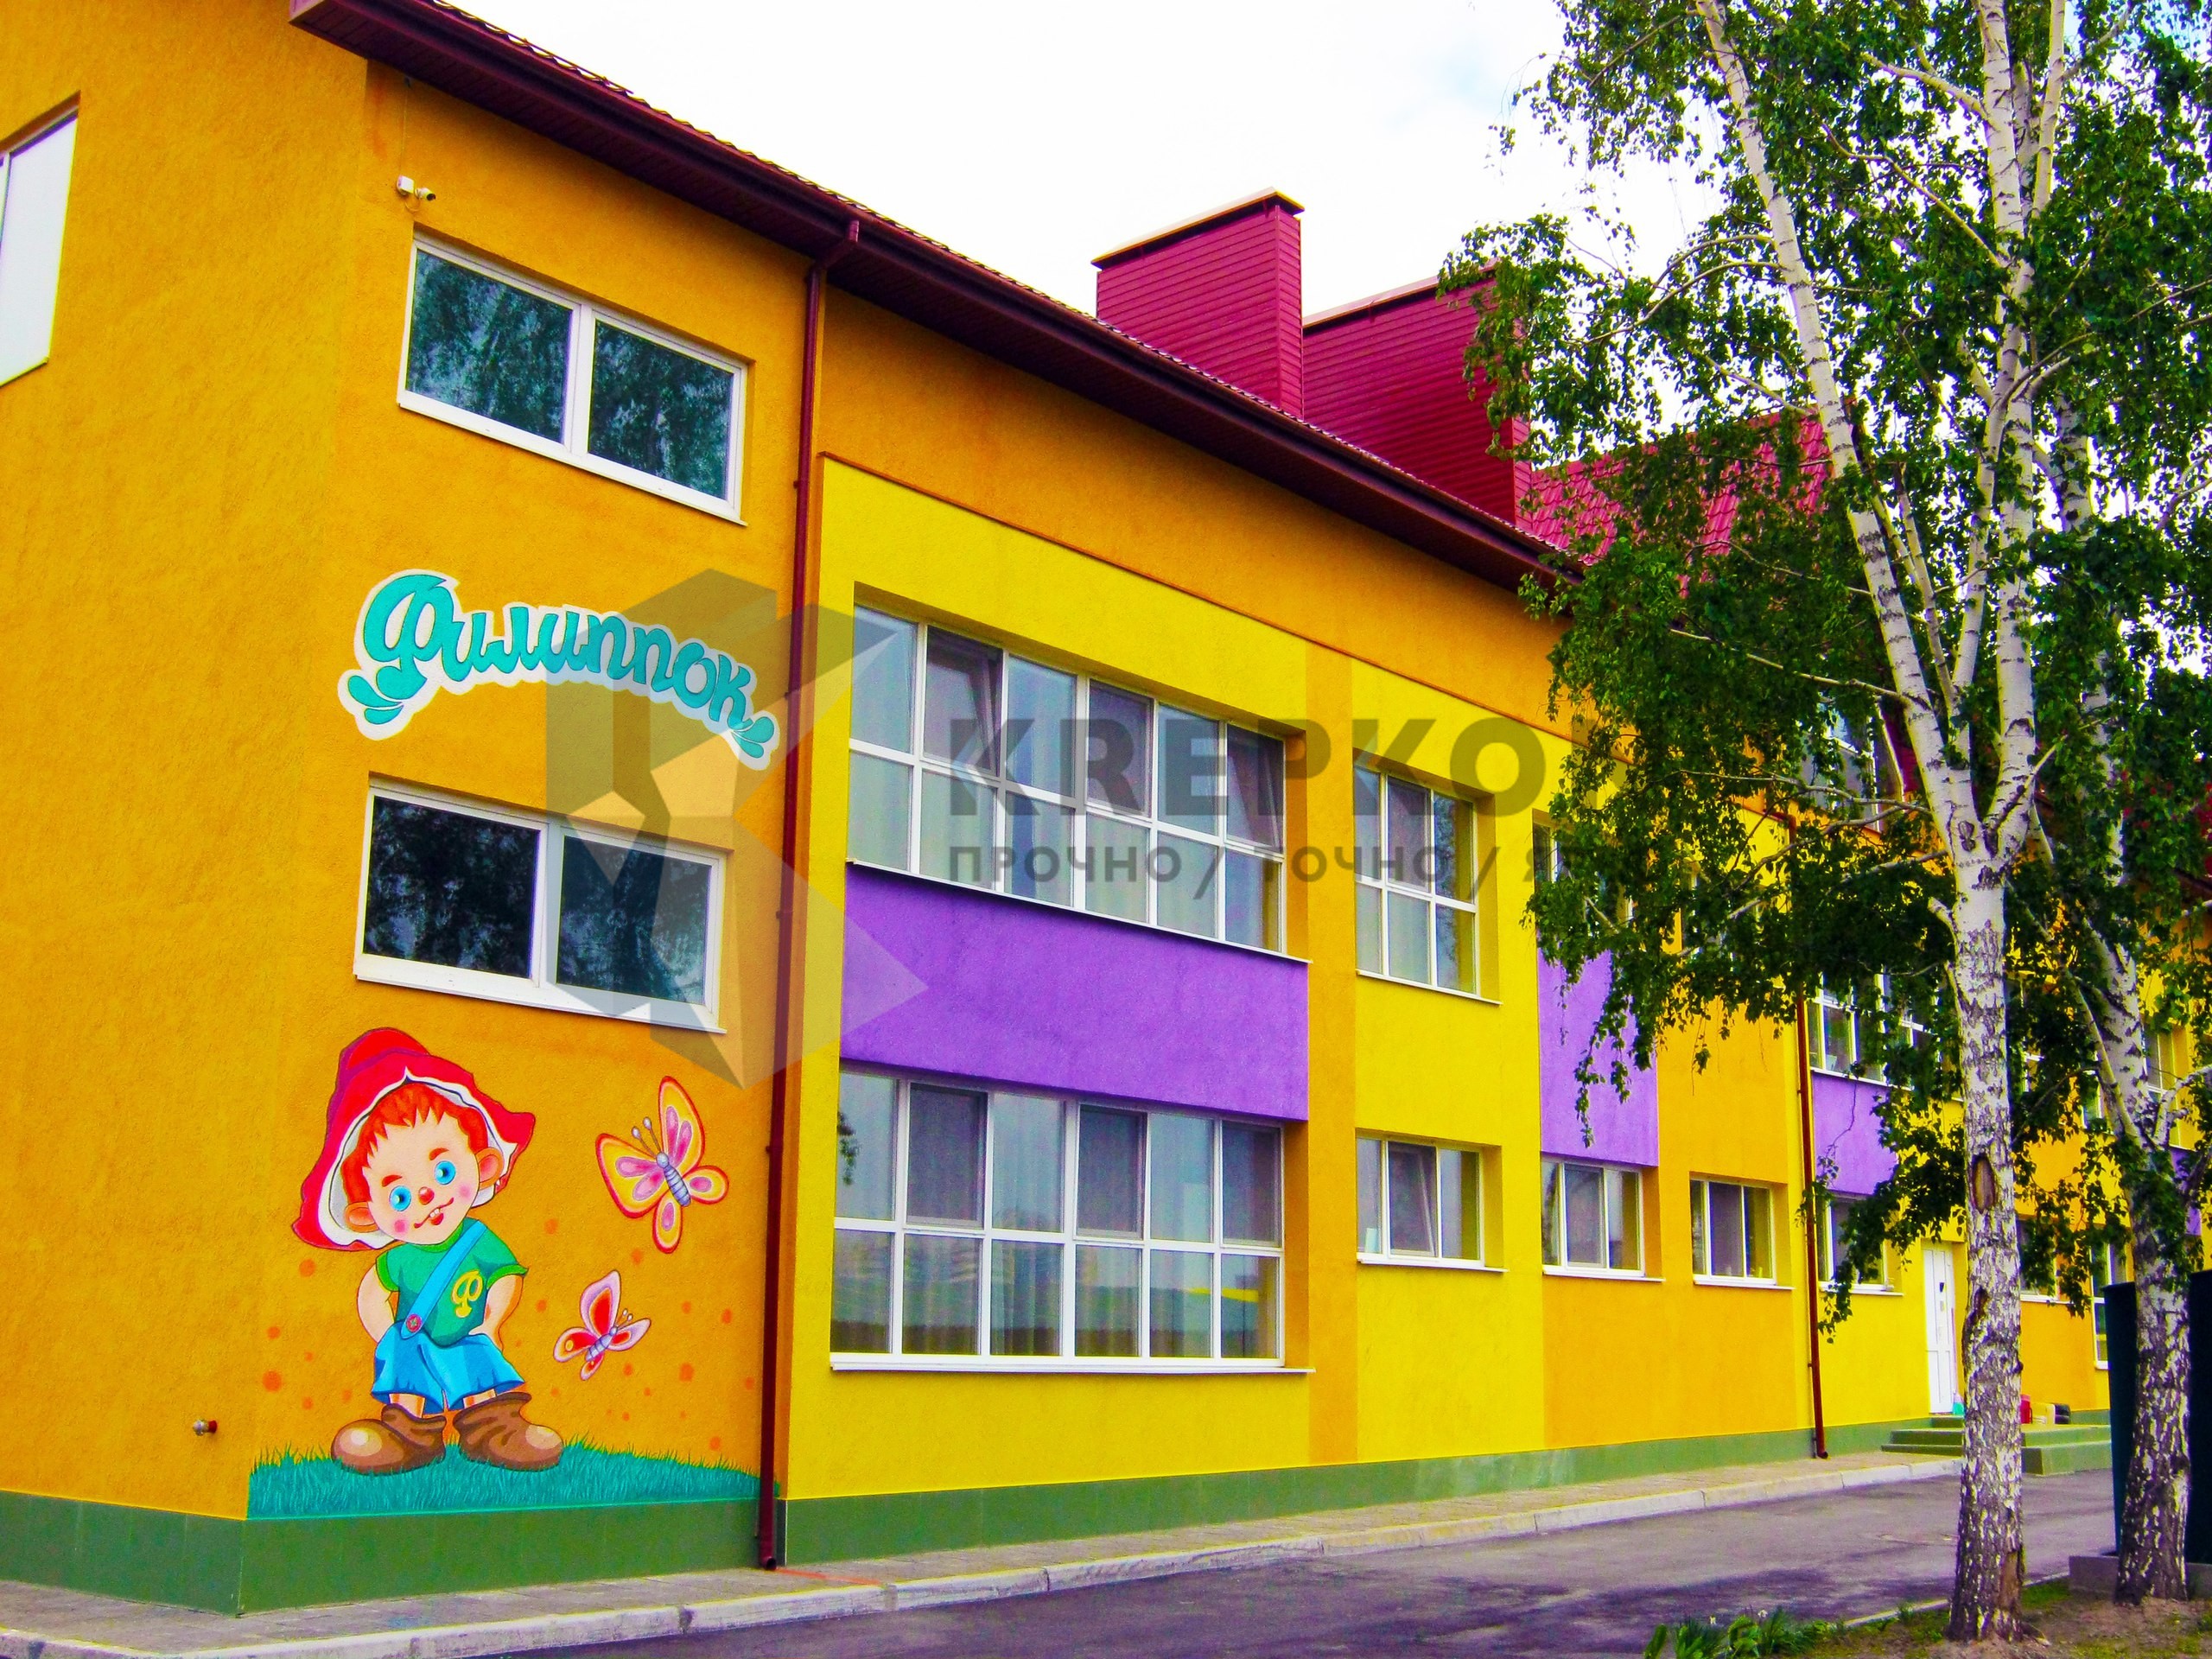 Название детского сада 9. Детский сад фасад. Фасад здания детского сада. Детский сад здание. Цветной фасад детского сада.